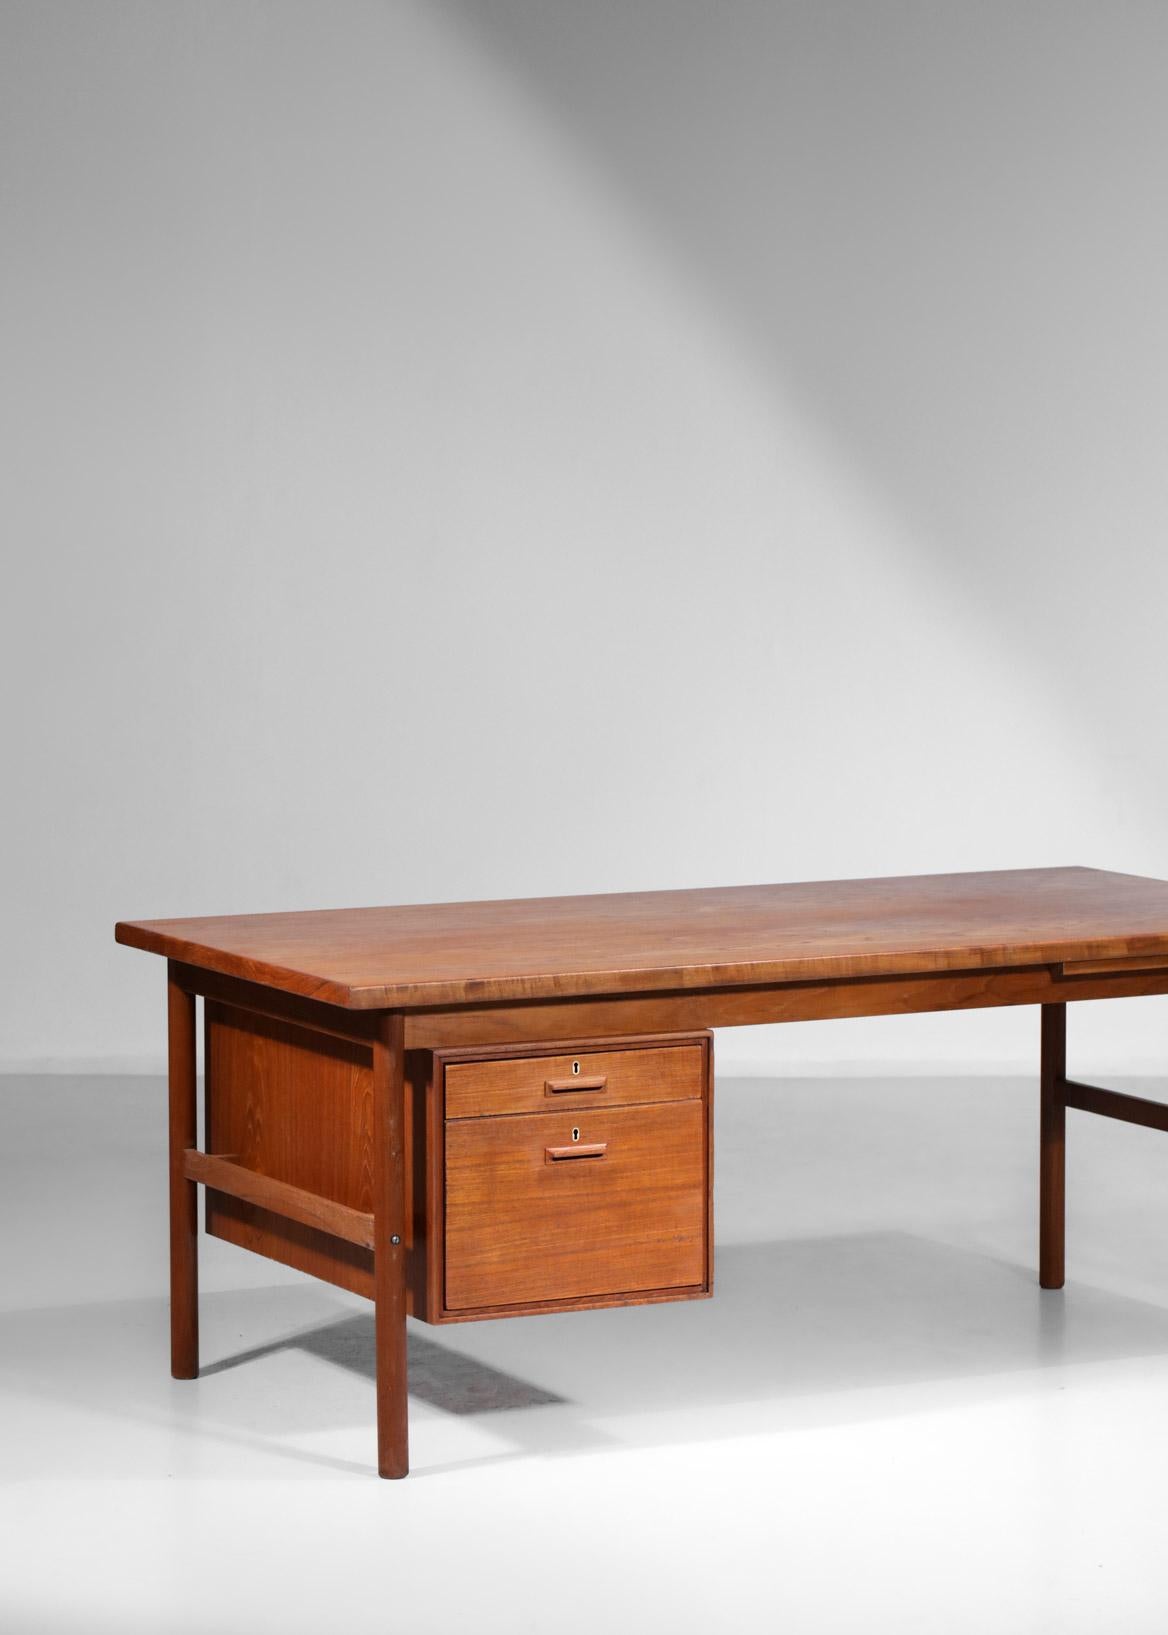 Large Danish Teak Desk with Pedestal, Scandinavian - E521 13